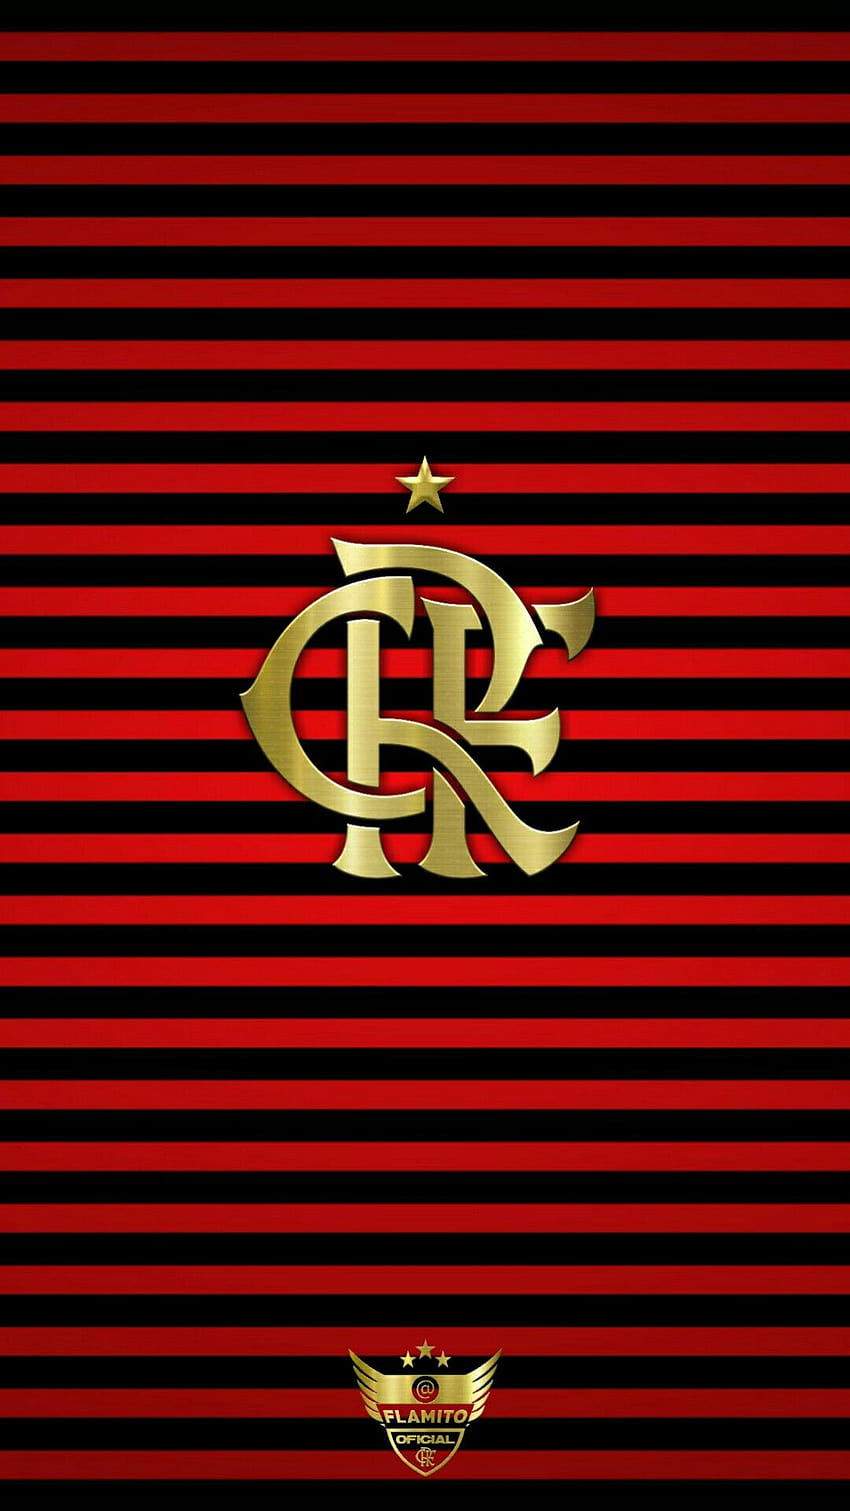 Flamengo / Papel de Parede im Jahr 2020, Flamengo 2020 HD-Handy-Hintergrundbild